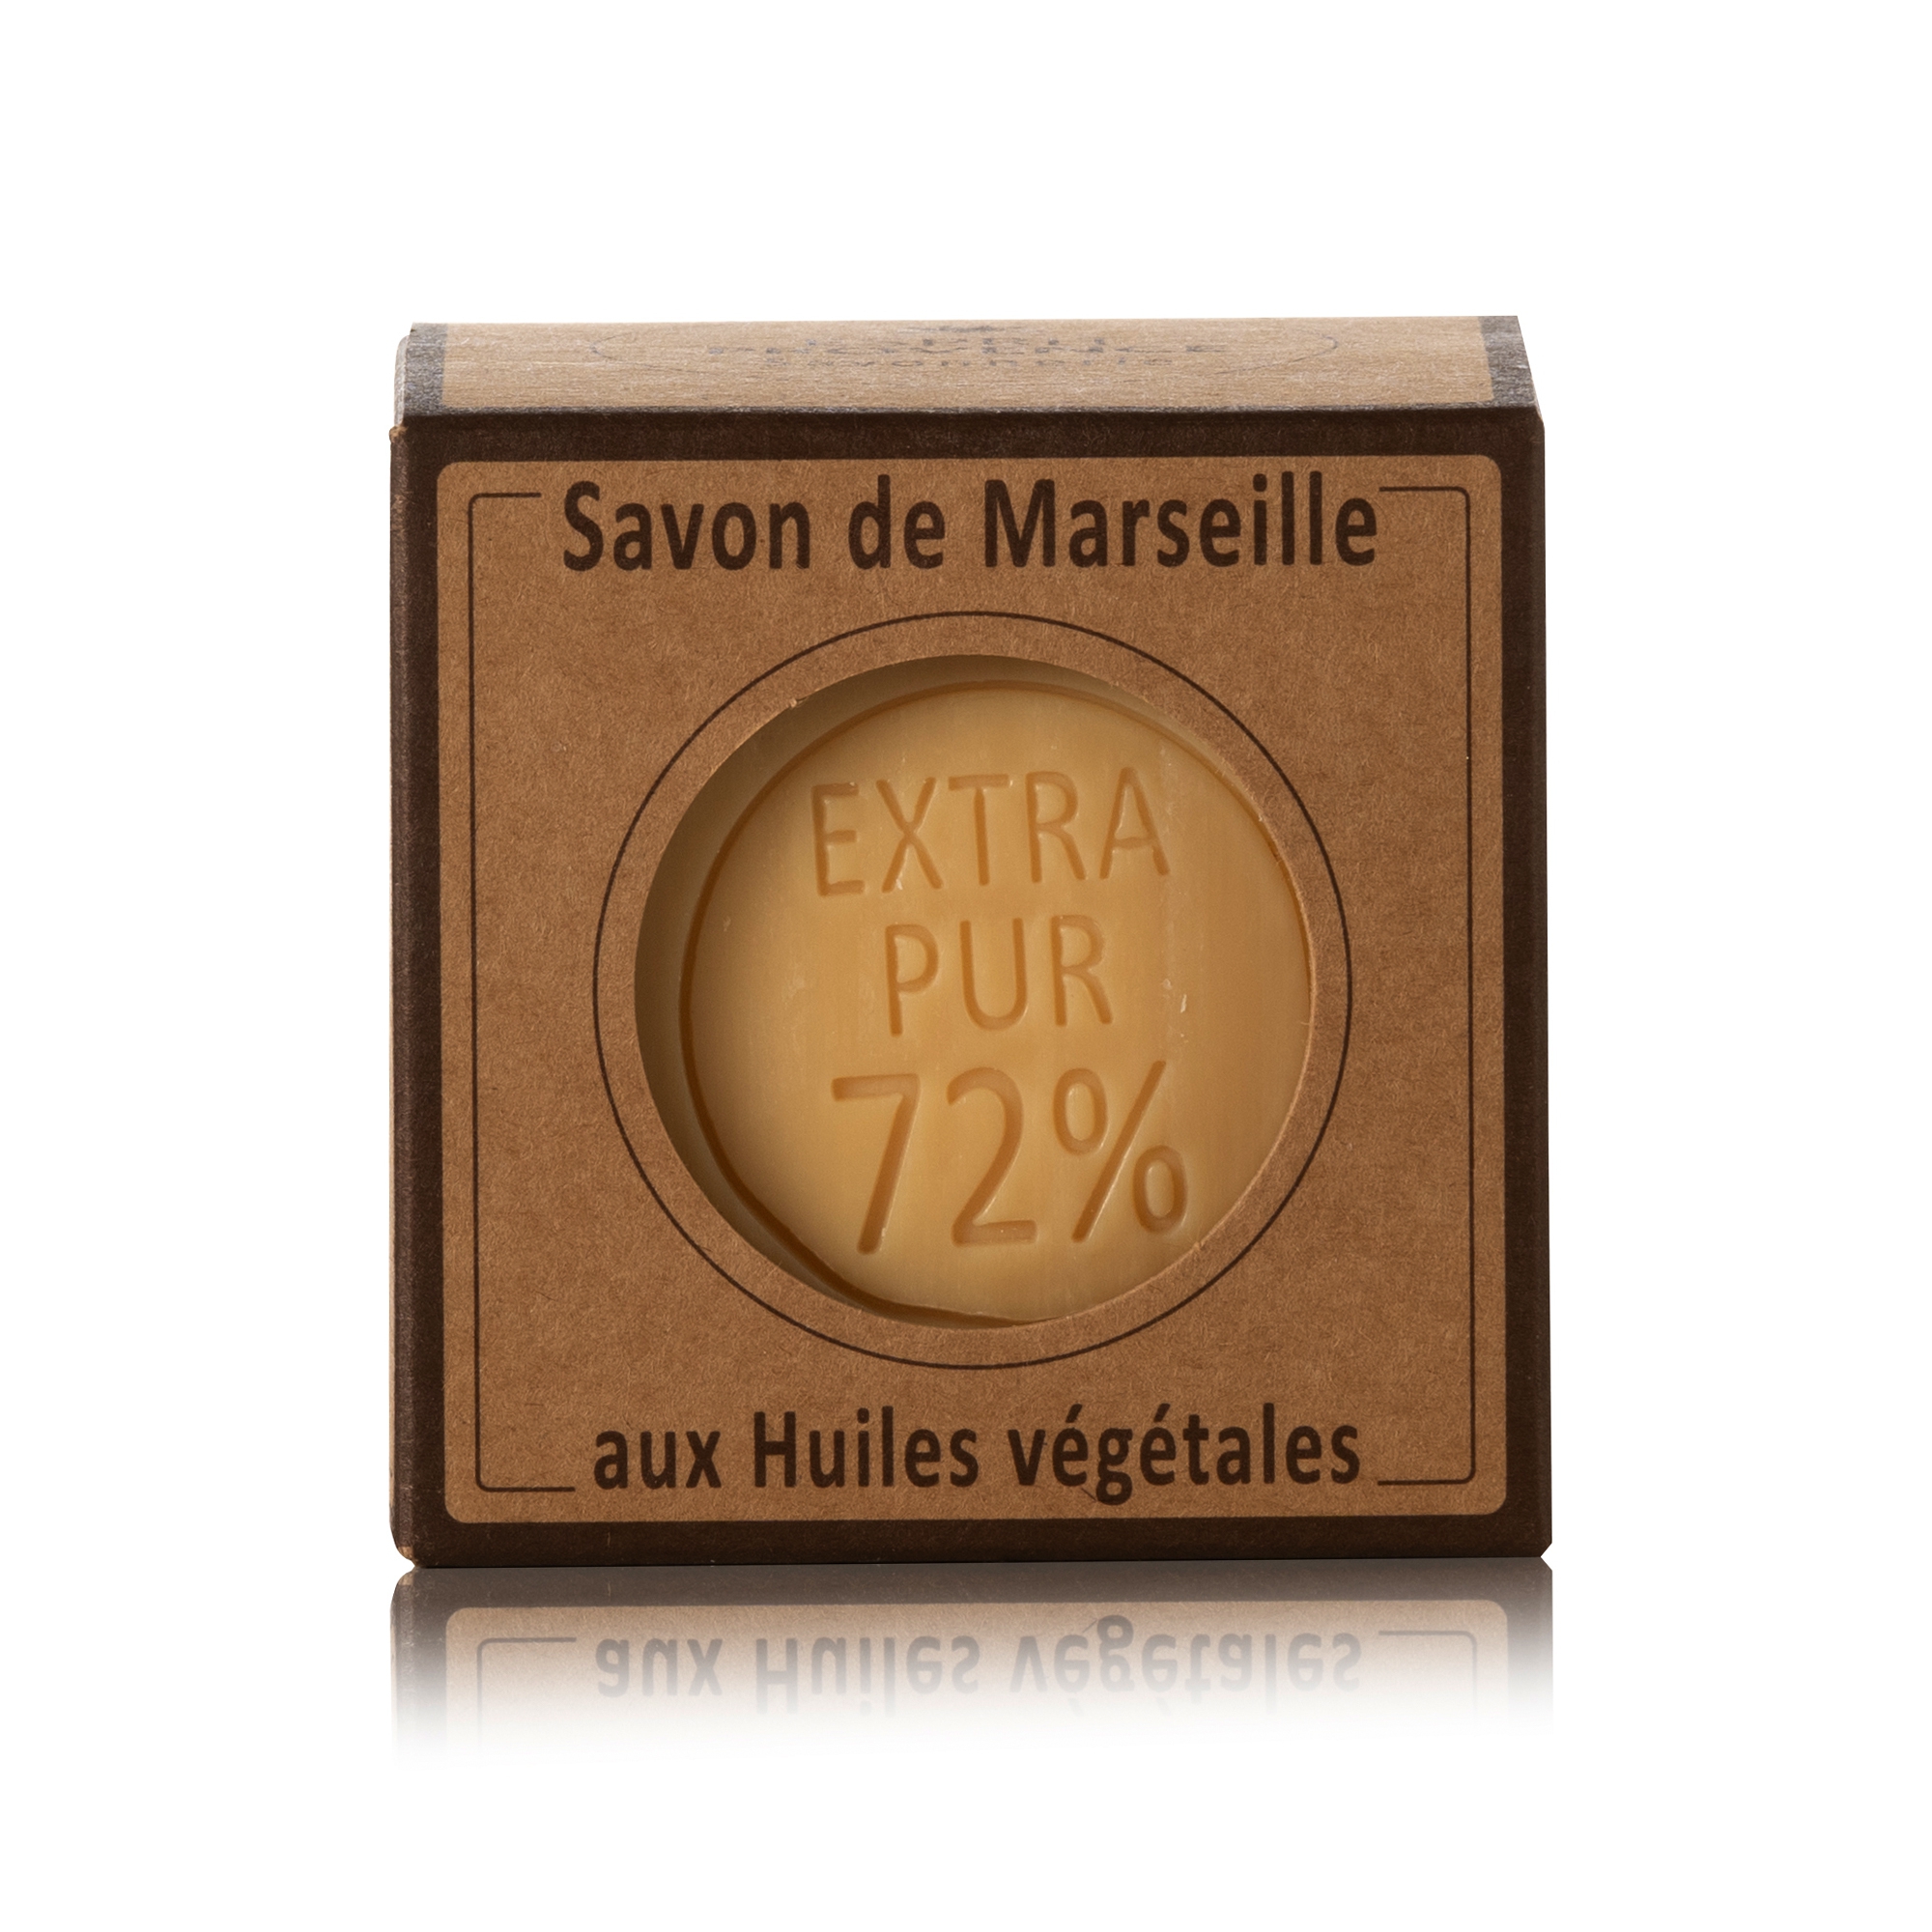 Savon de Marseille 72% huile d'olive 300g cube Savon de Marseille (VO)